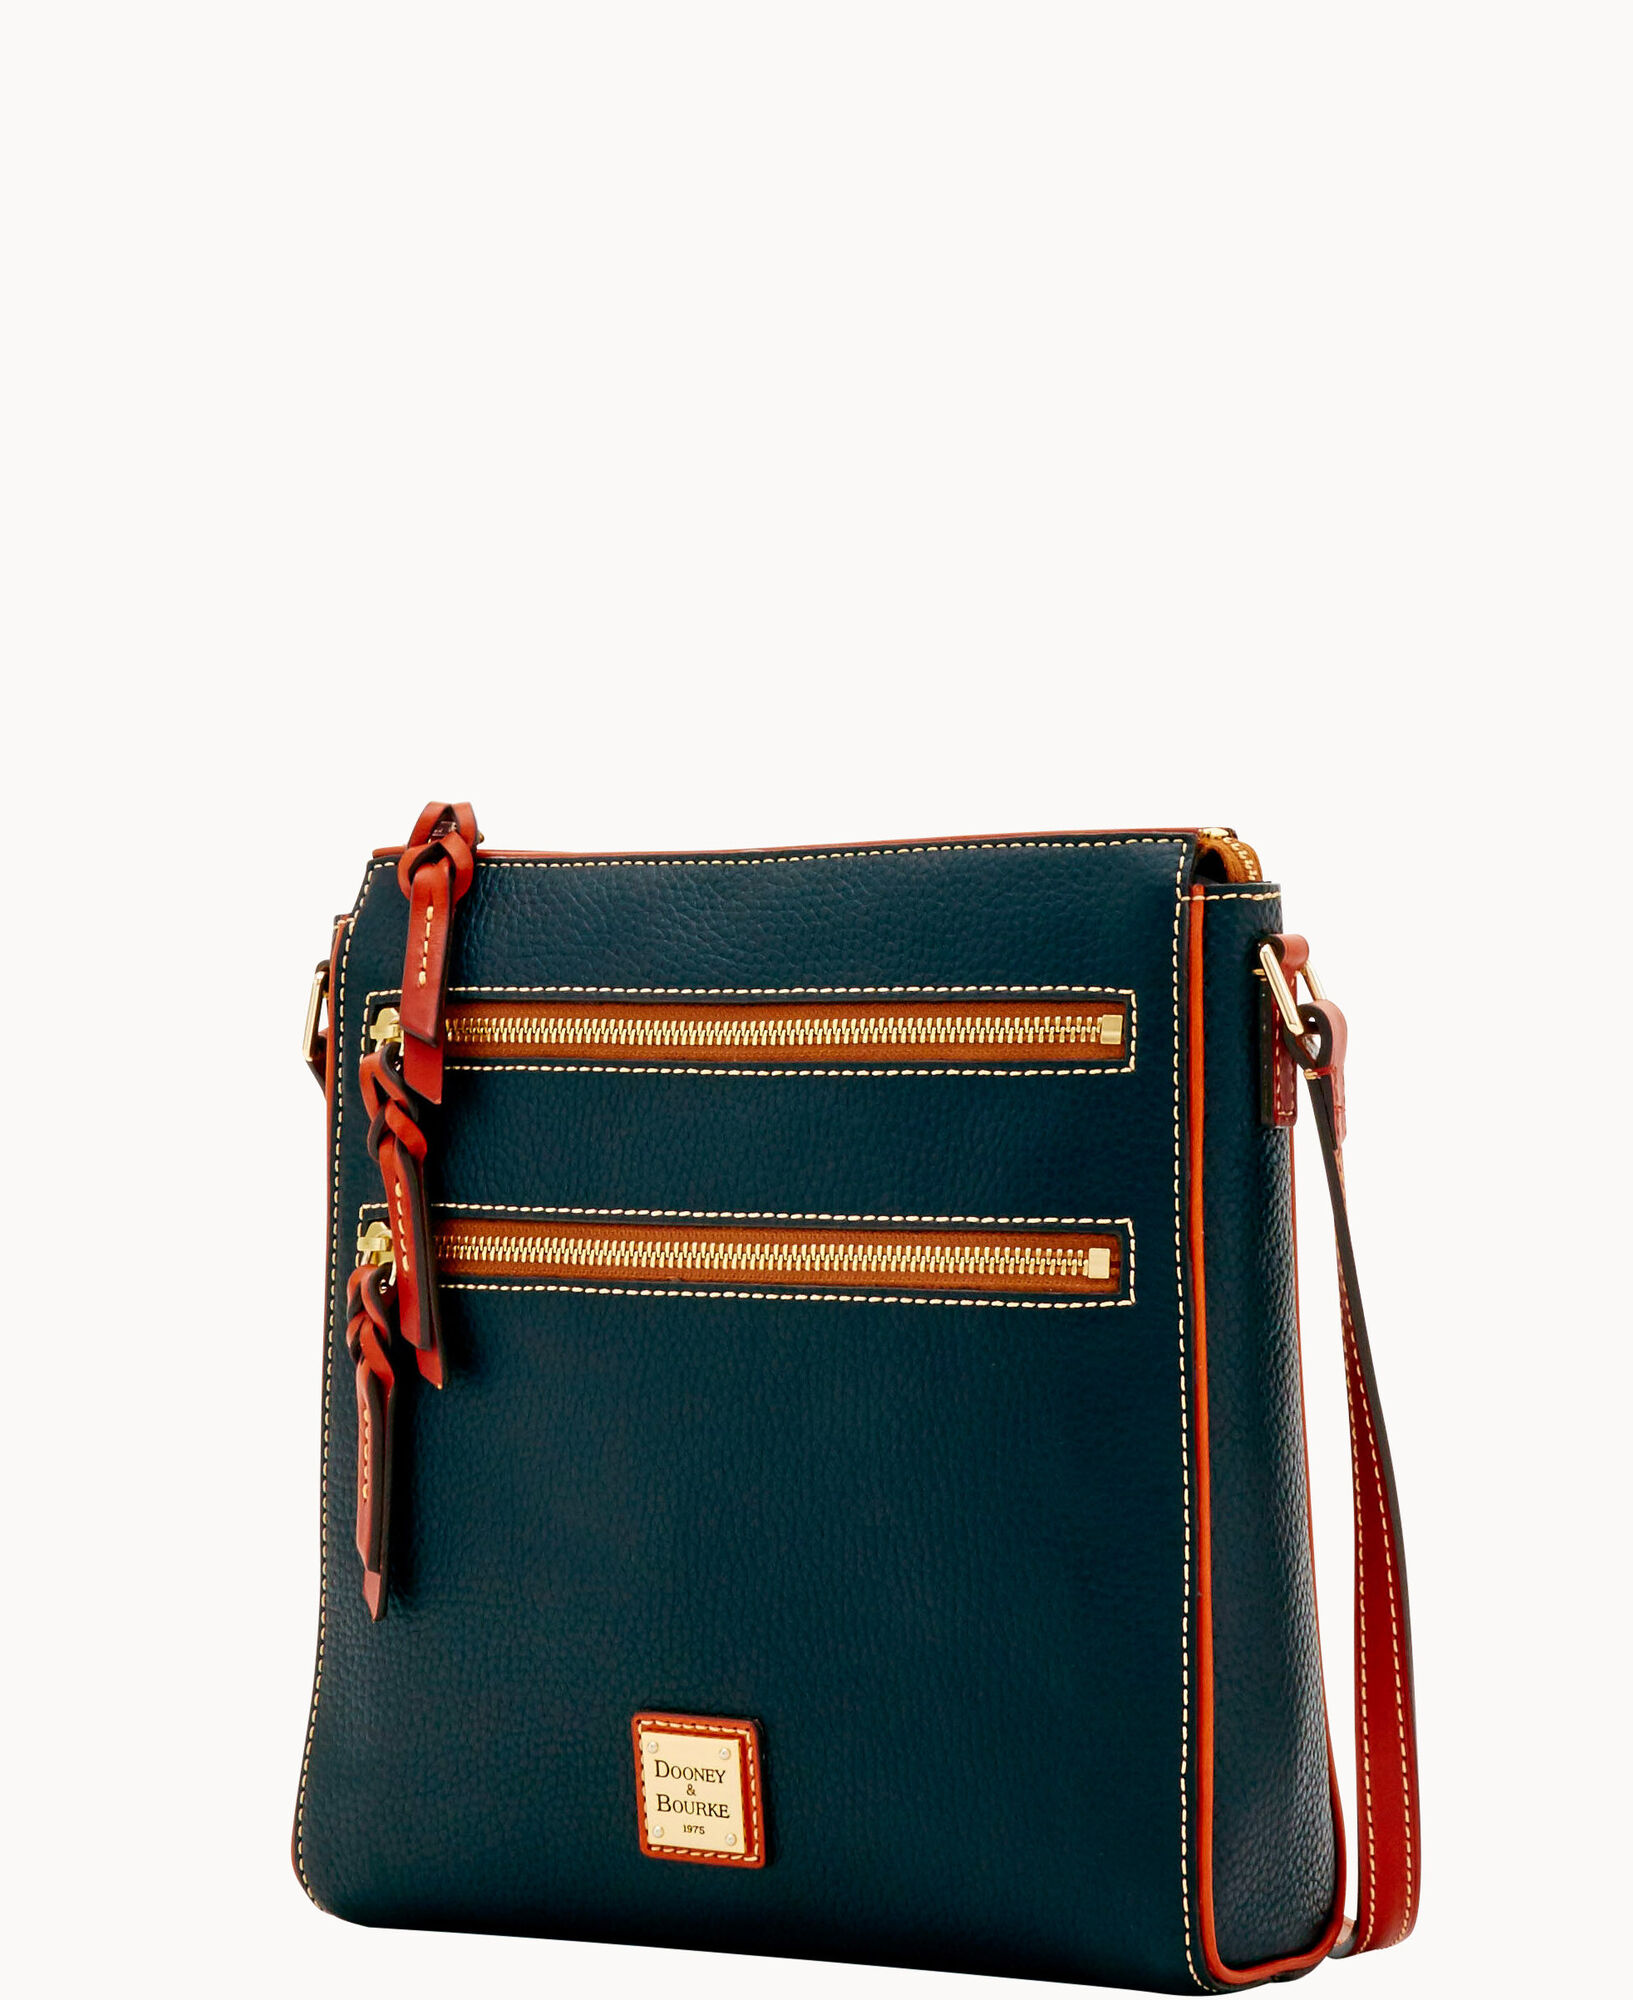 Dooney & Bourke Handbag, Pebble Grain Triple Zip Crossbody - Black:  Handbags